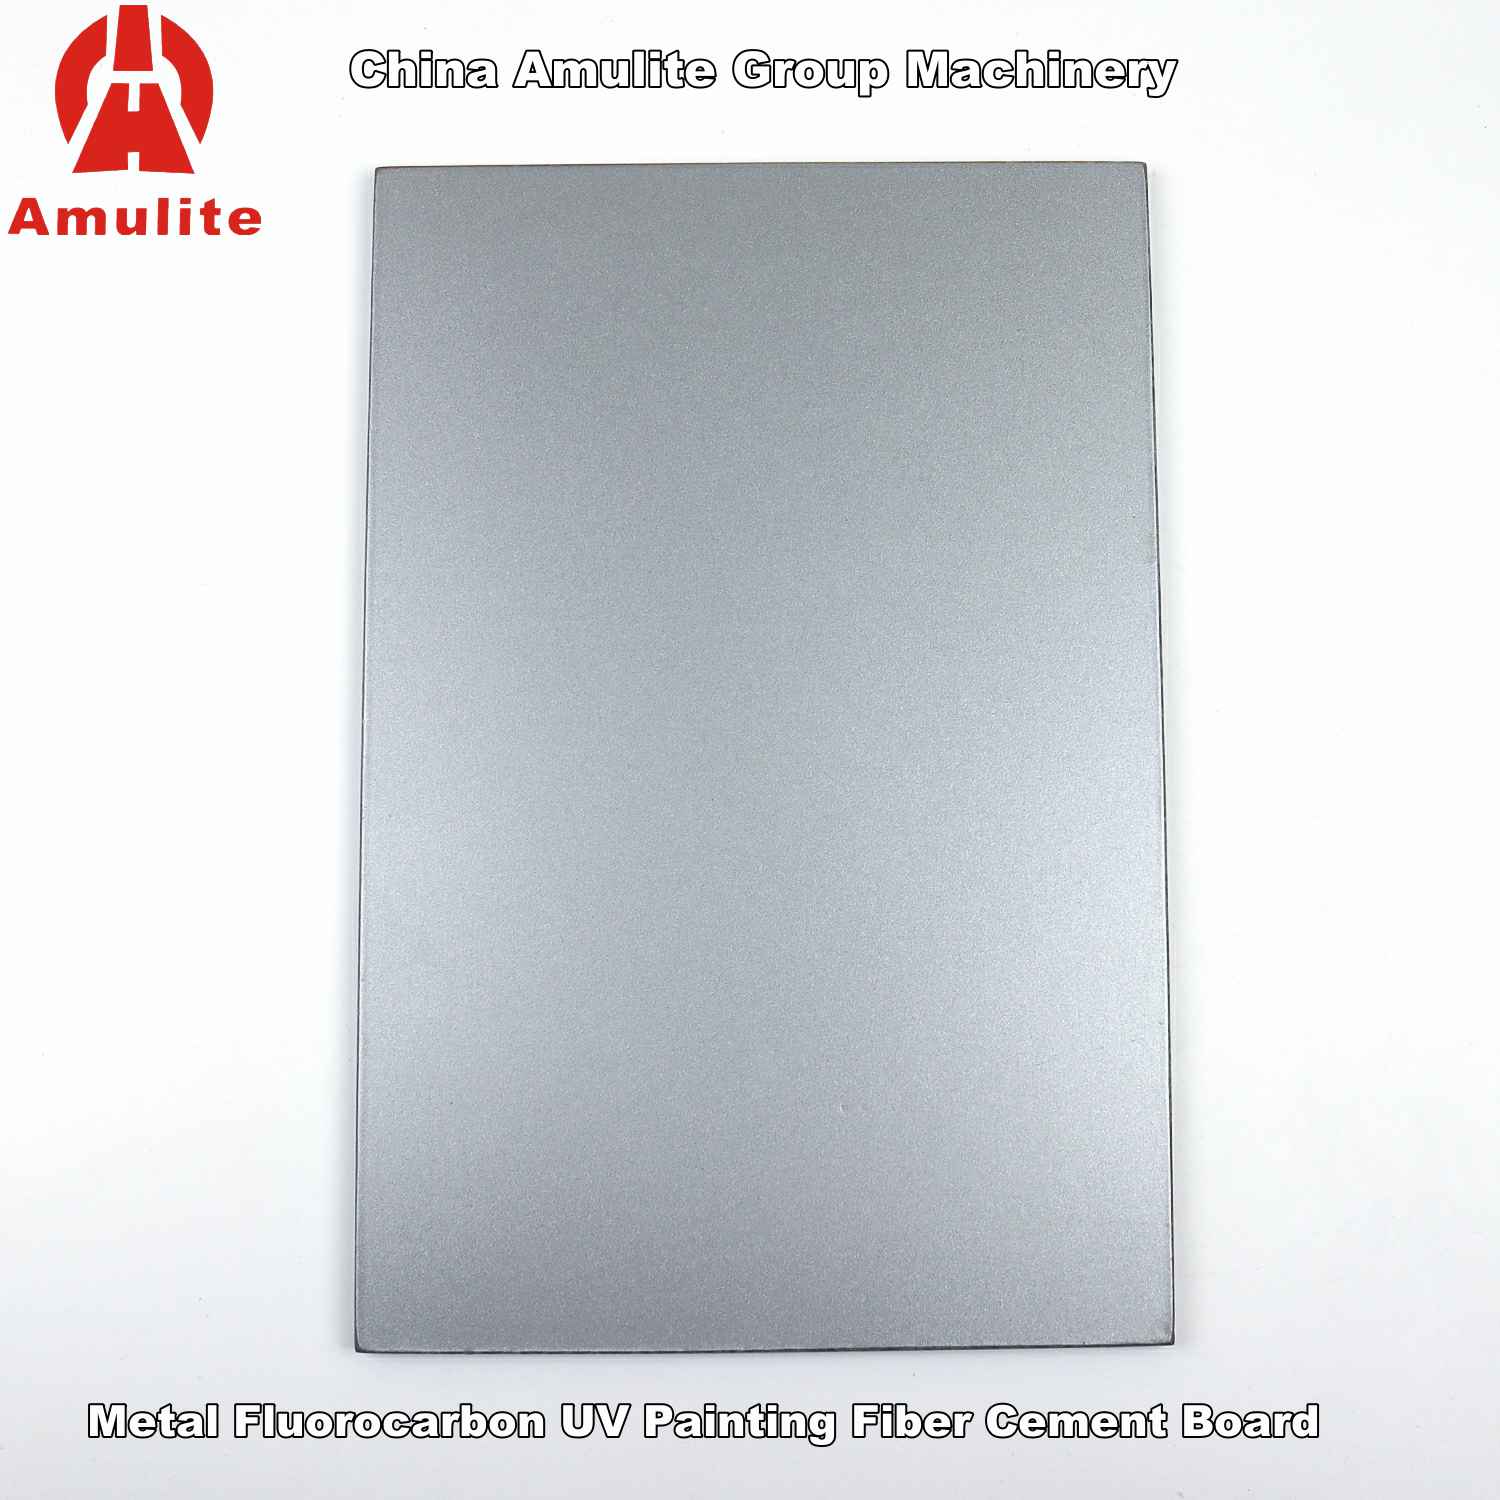 Metal Fluorocarbon UV Painting Fiber Cement Board (2)